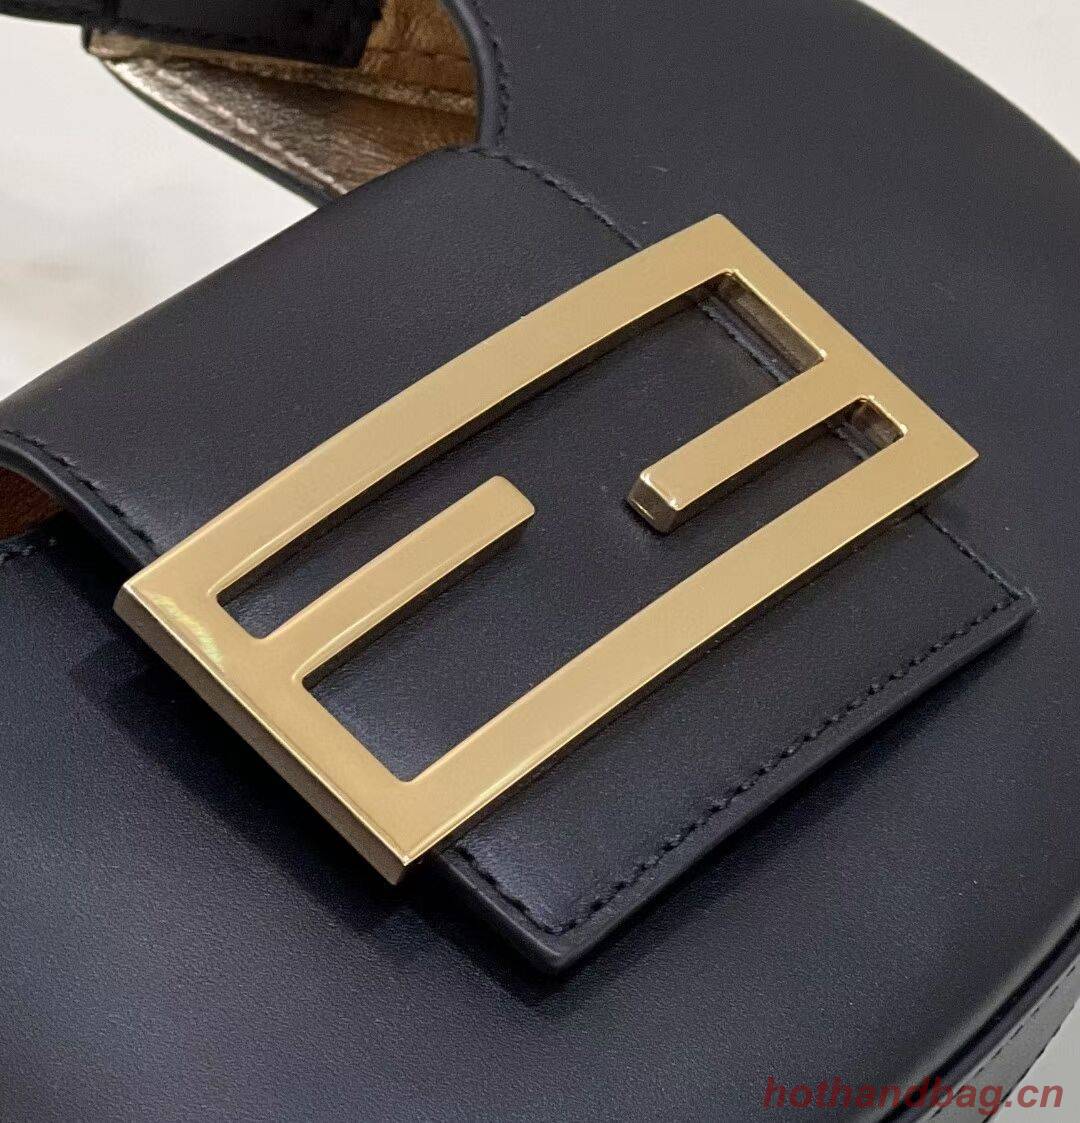 Fendi Cookie black leather mini bag 8BS065A